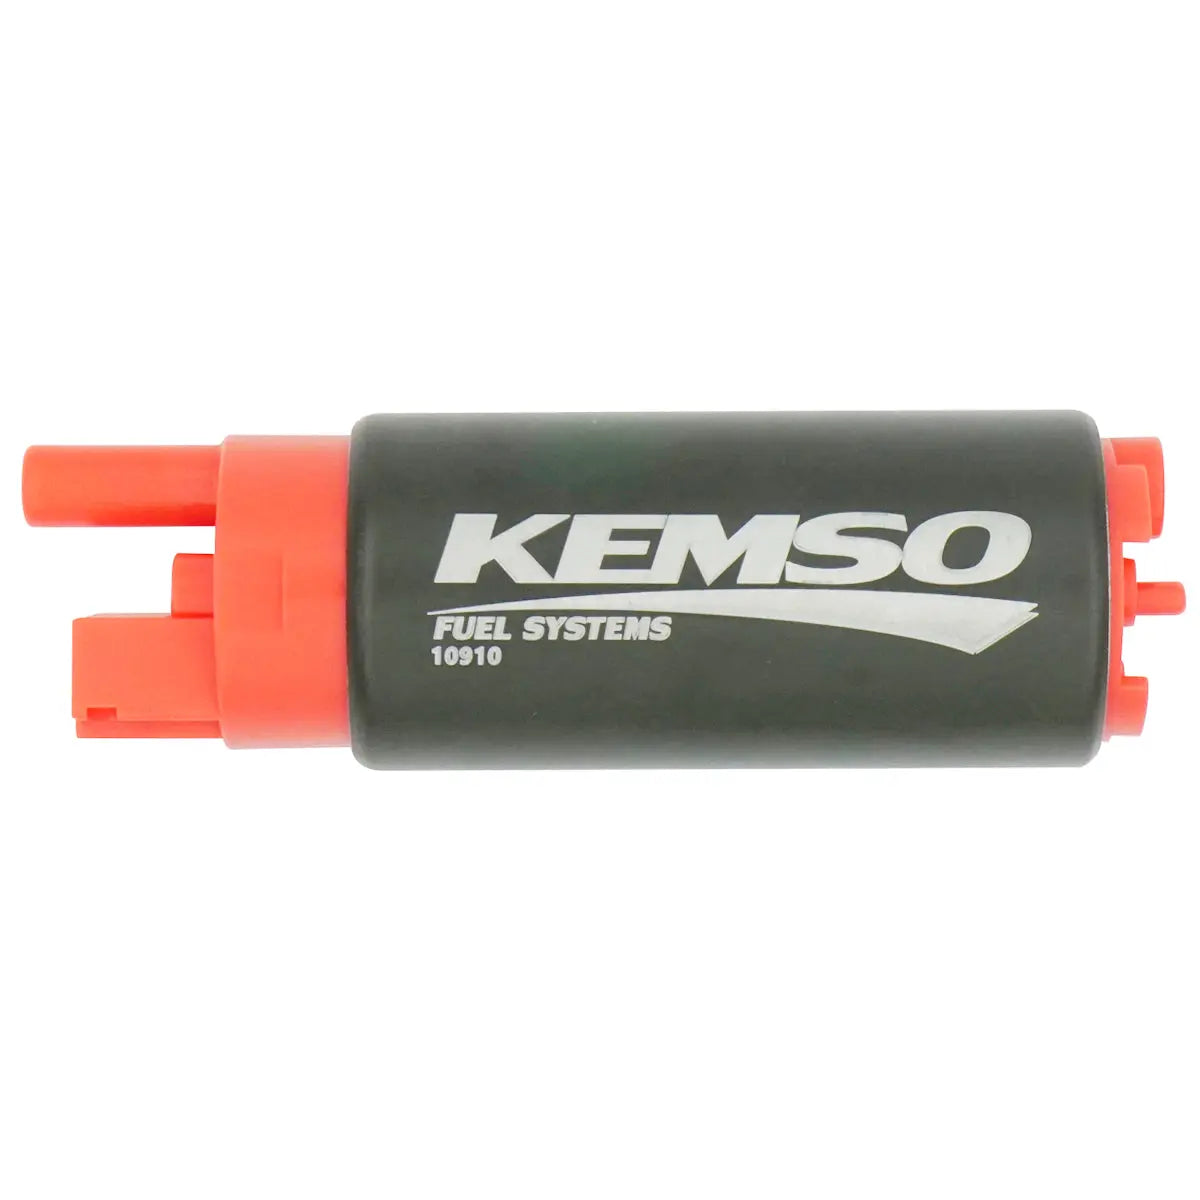 KEMSO 340LPH High Performance Fuel Pump for Toyota Carinae 1993-1997 - KEMSO